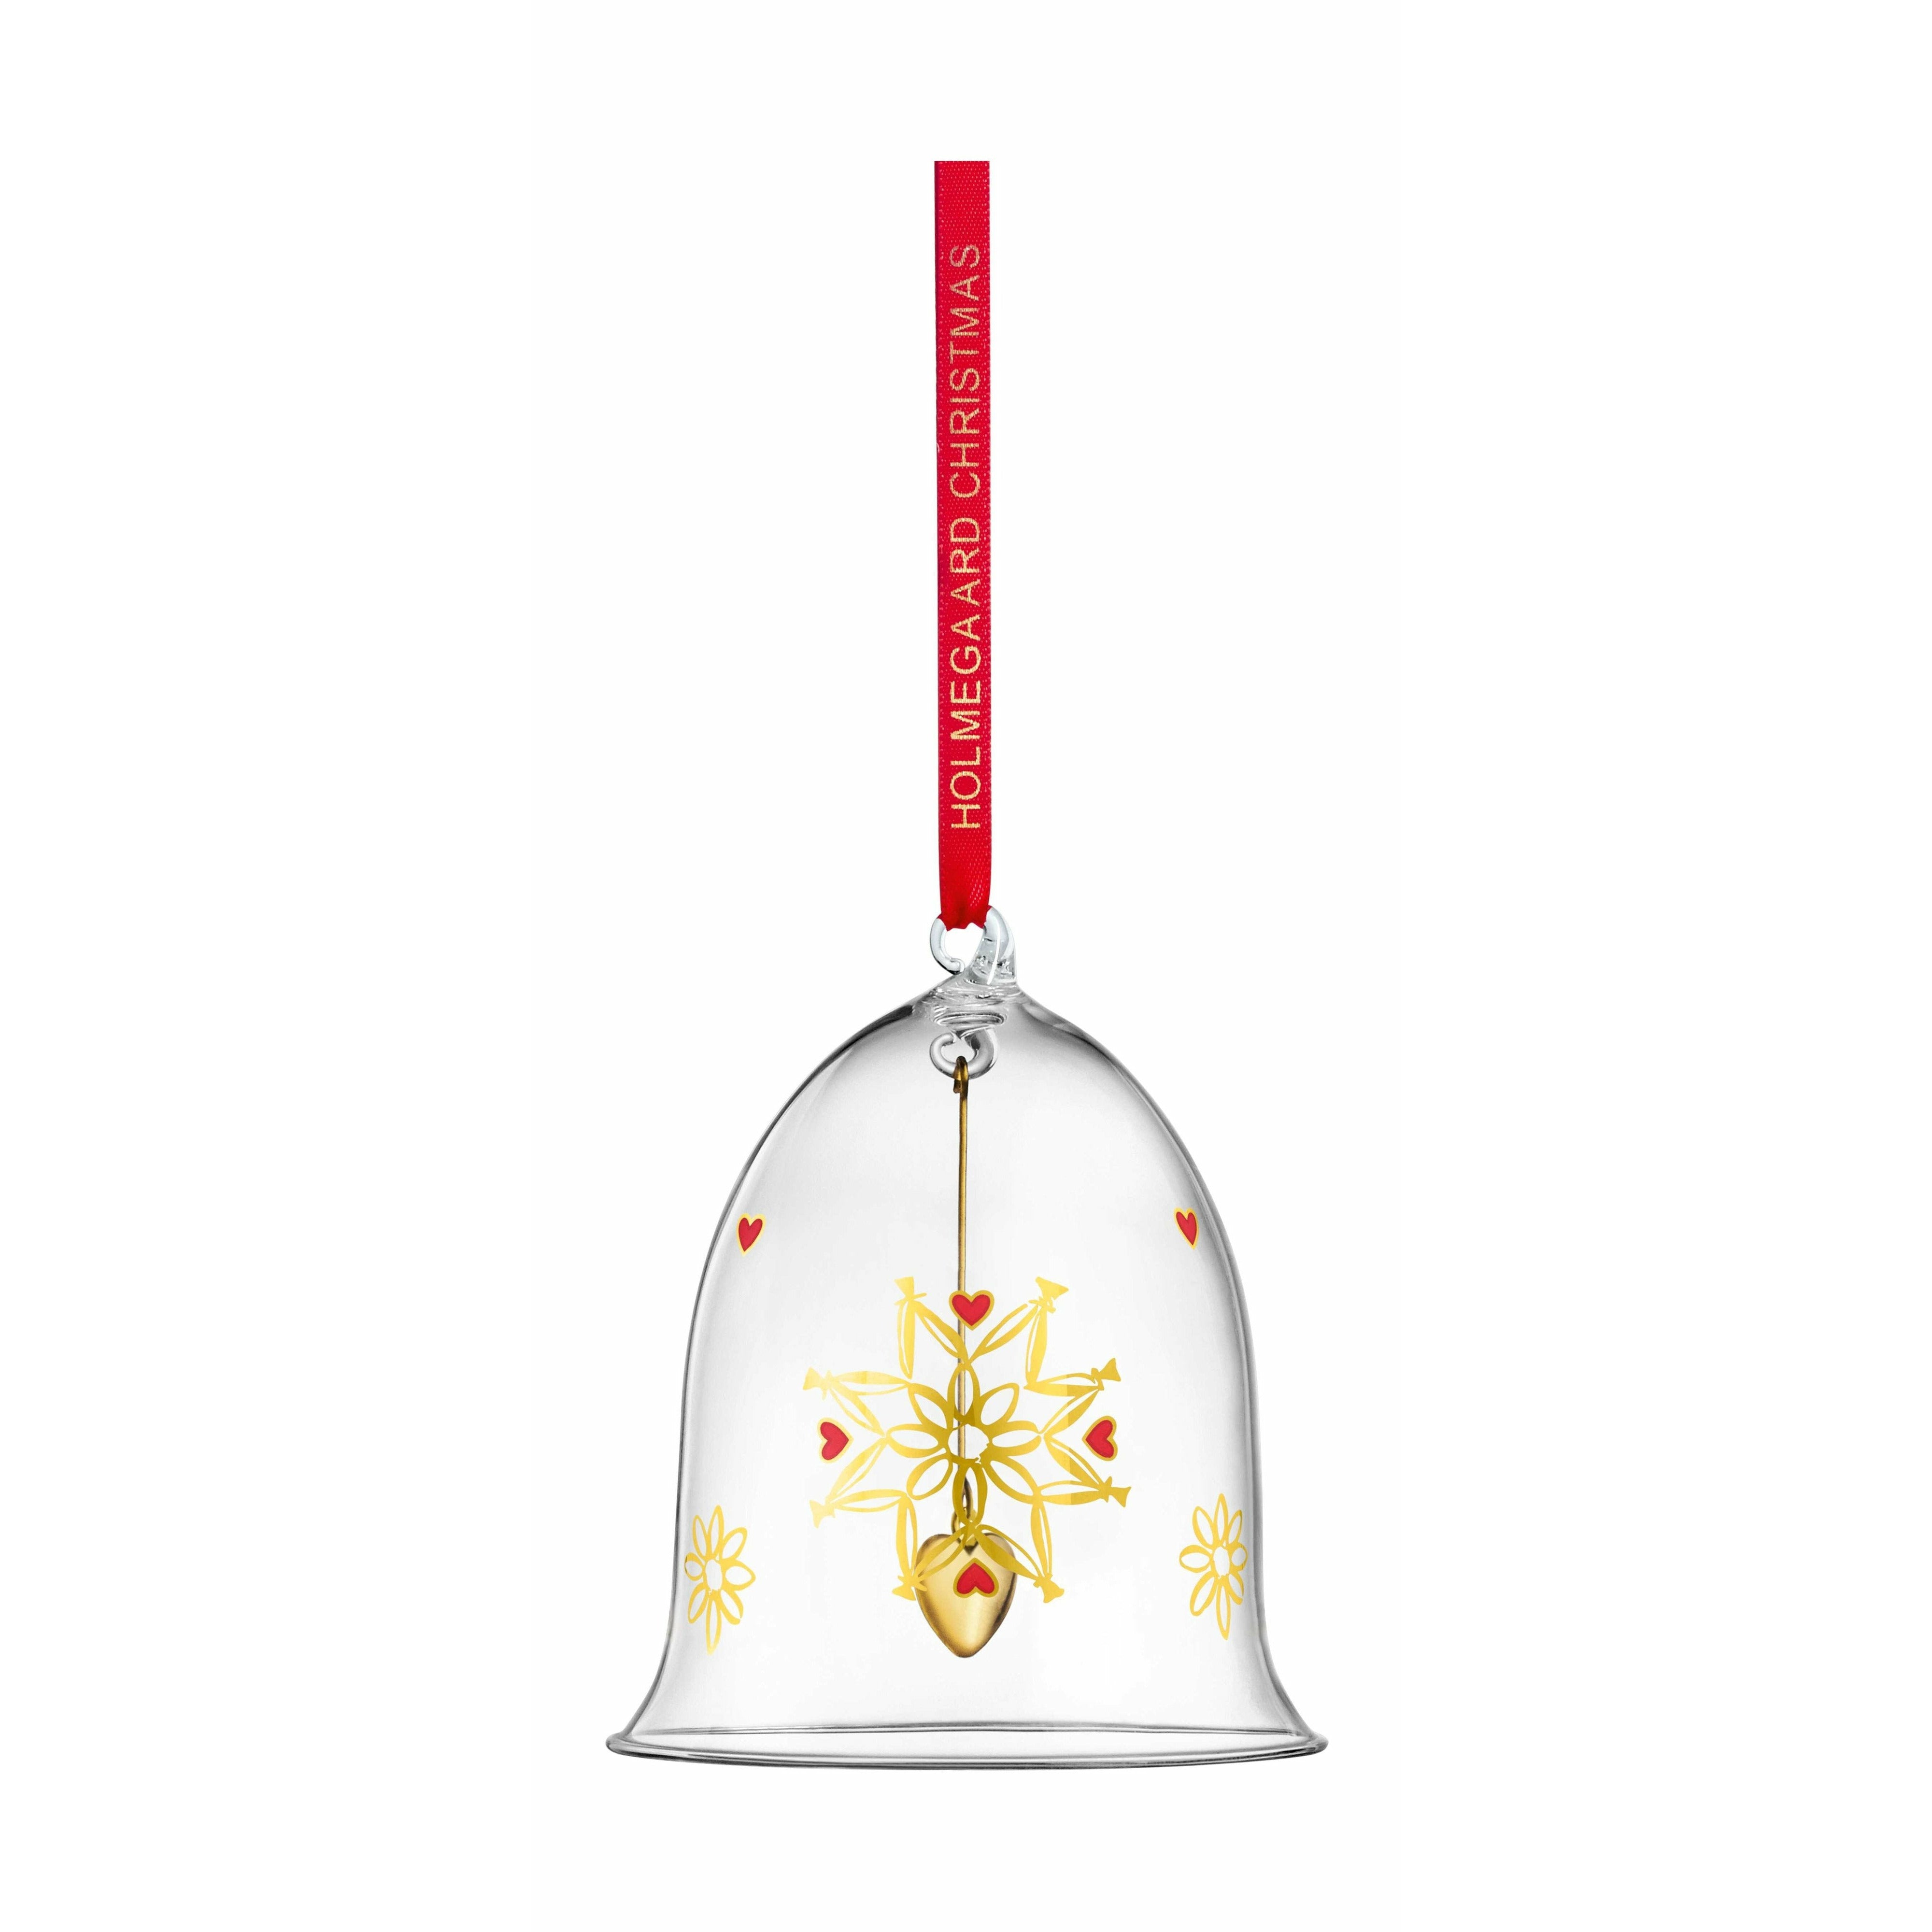 Holmegaard Ann Sofi Romme Christmas Bell, groot